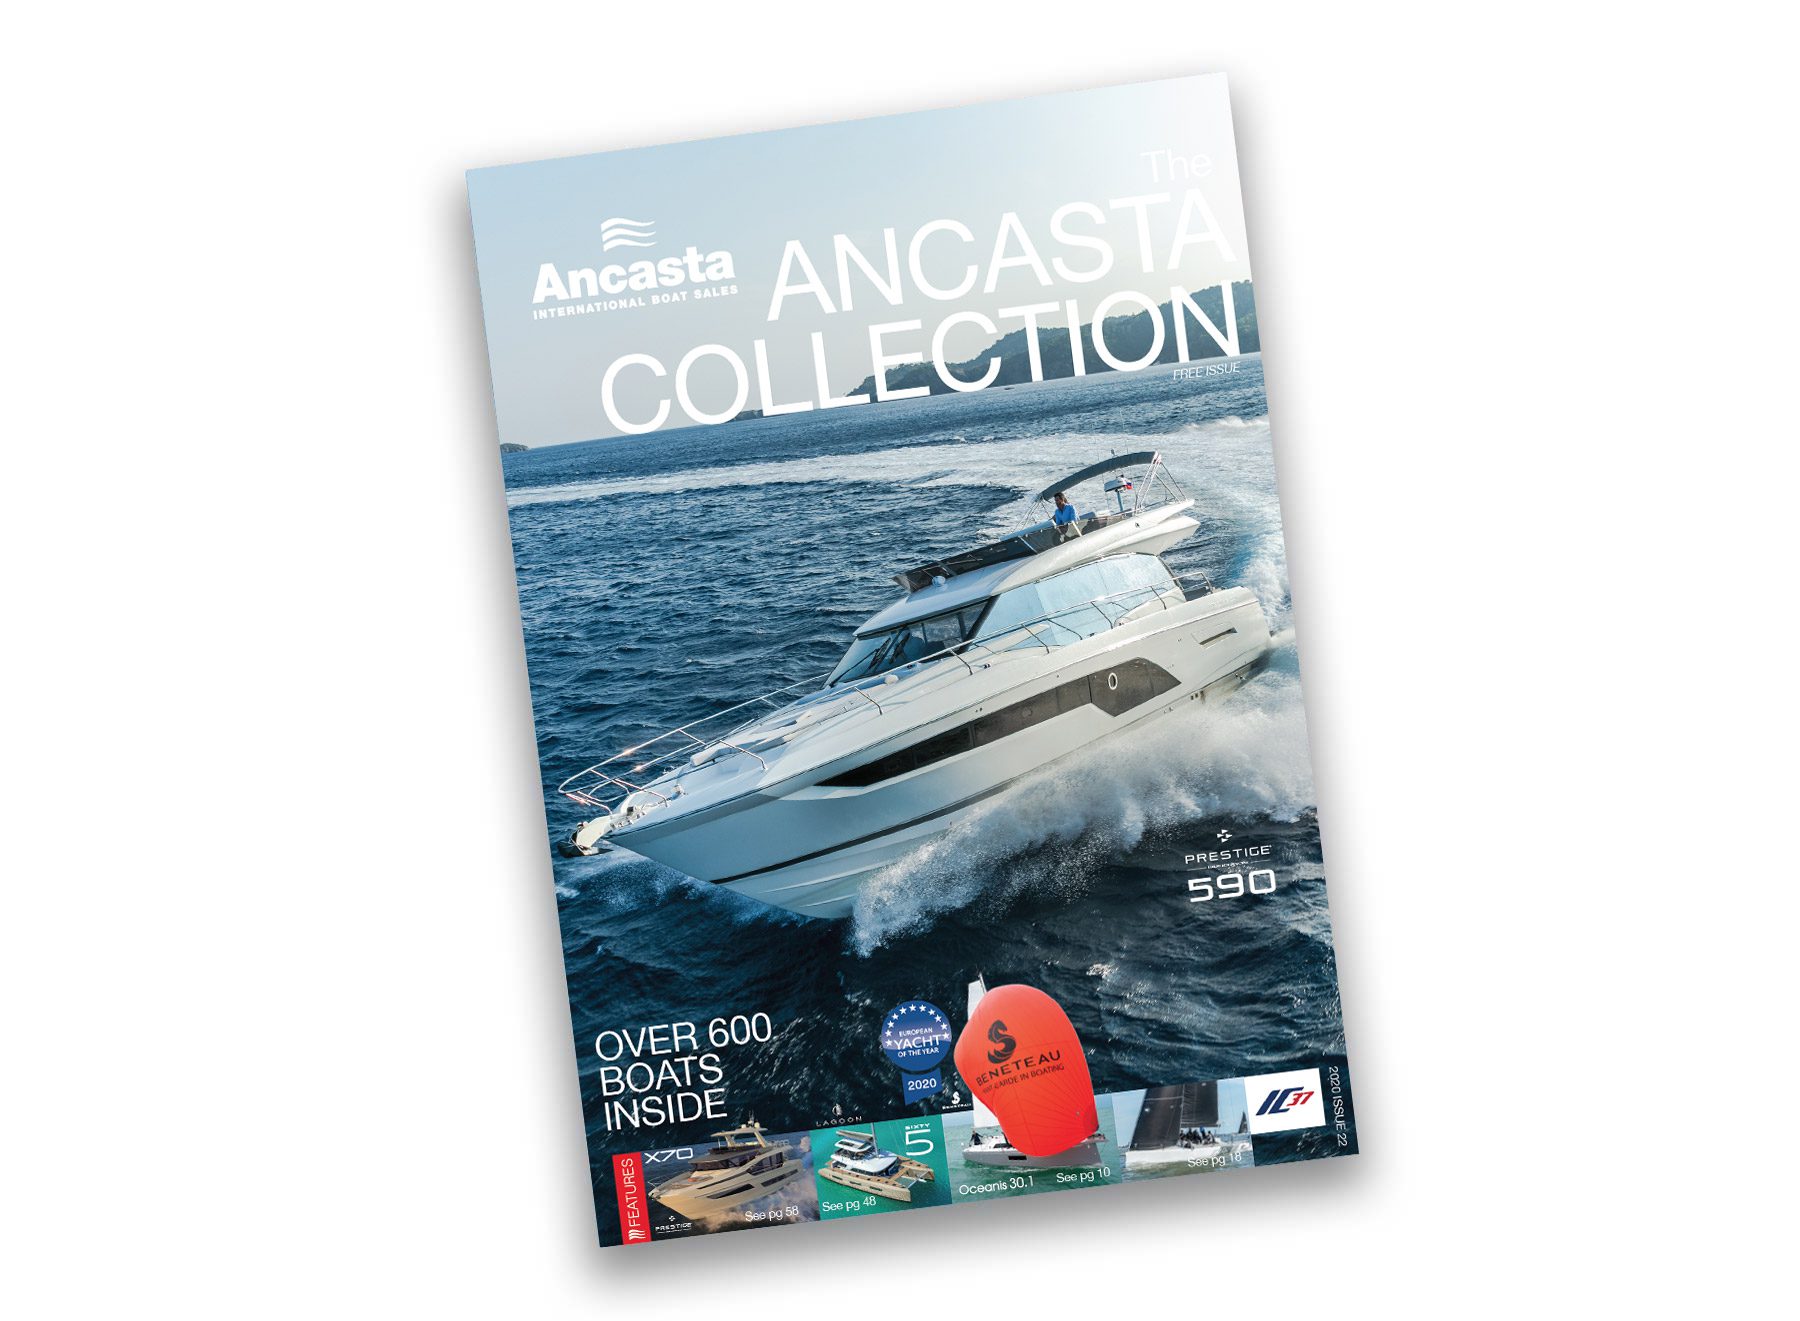 Ancasta collection magazine issue 22